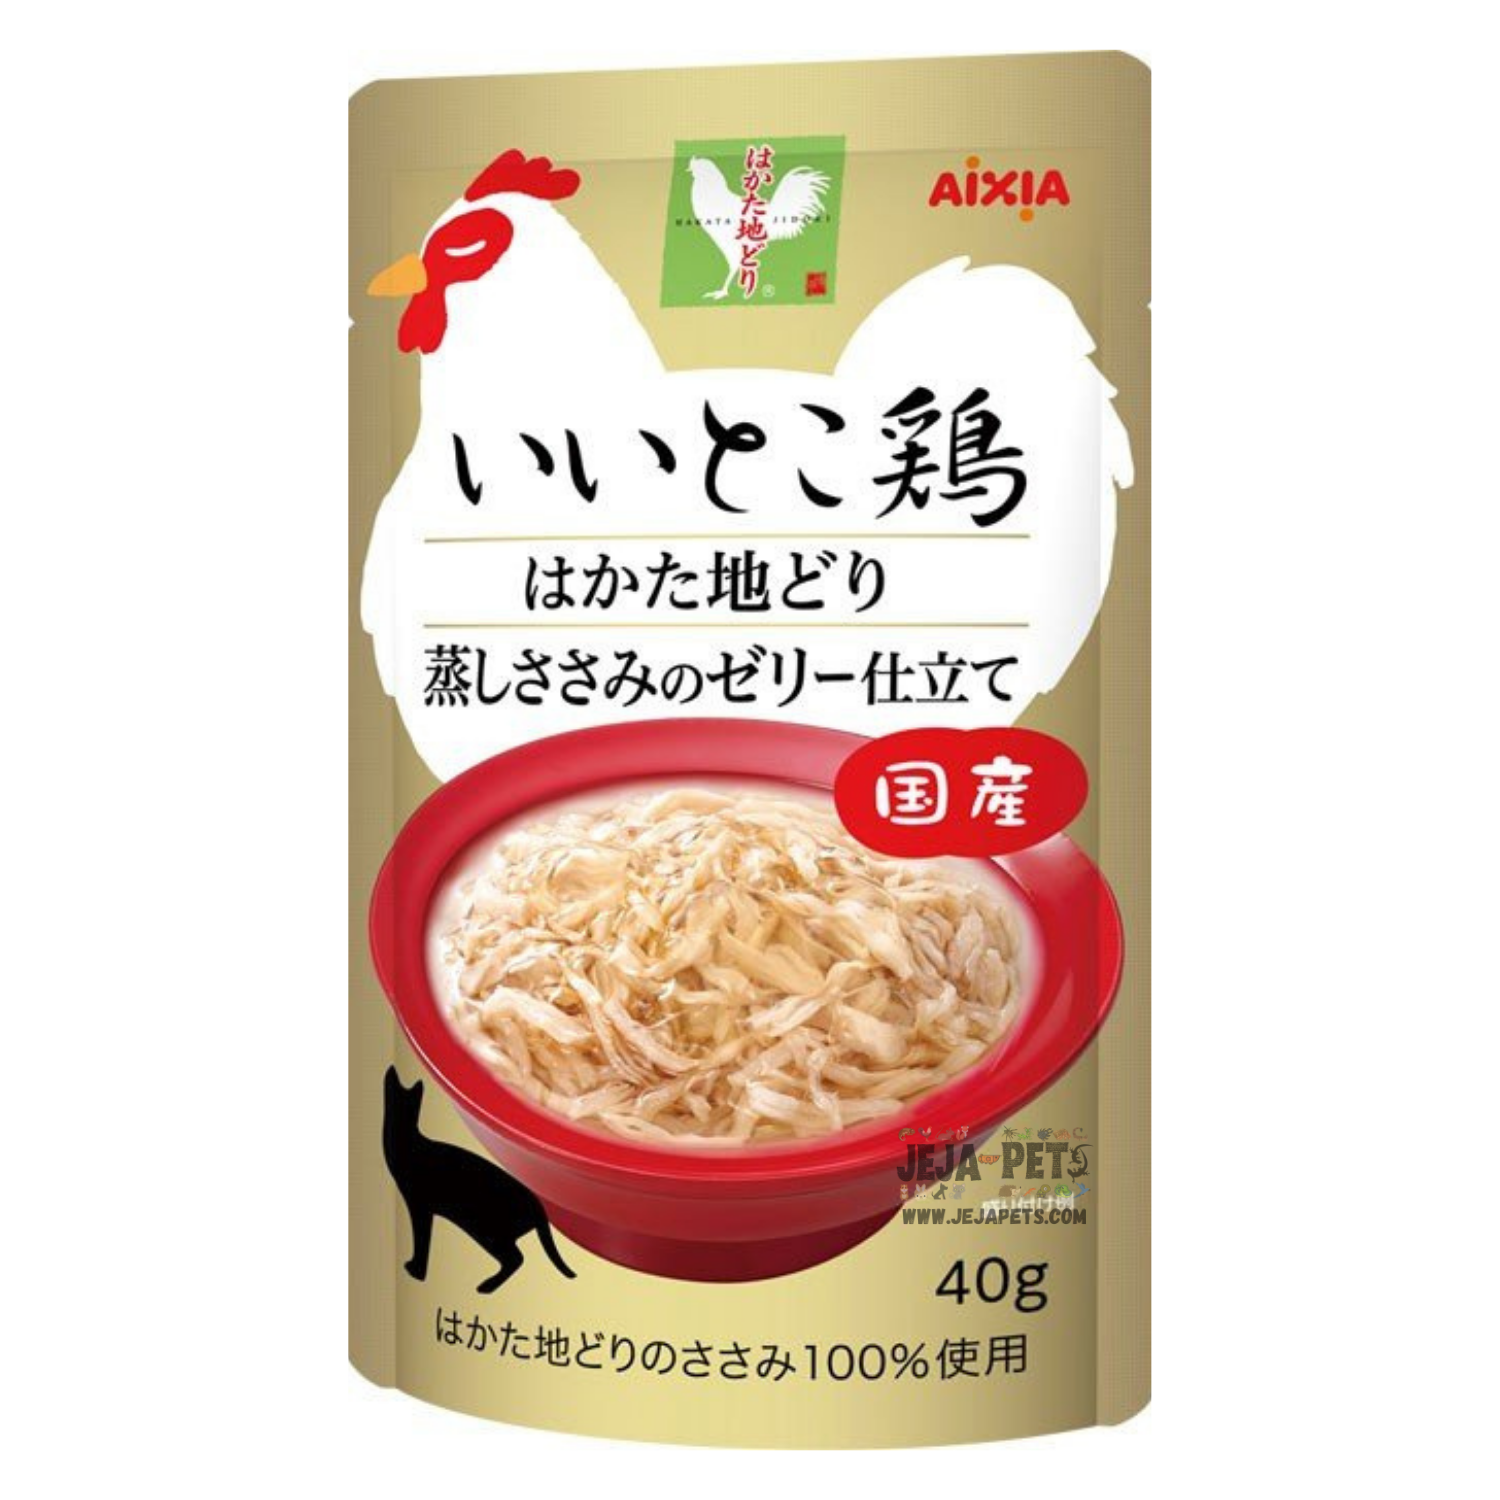 Aixia Iitoko Dori Hakata Jidori Steamed Chicken with Jelly for Cats - 40g